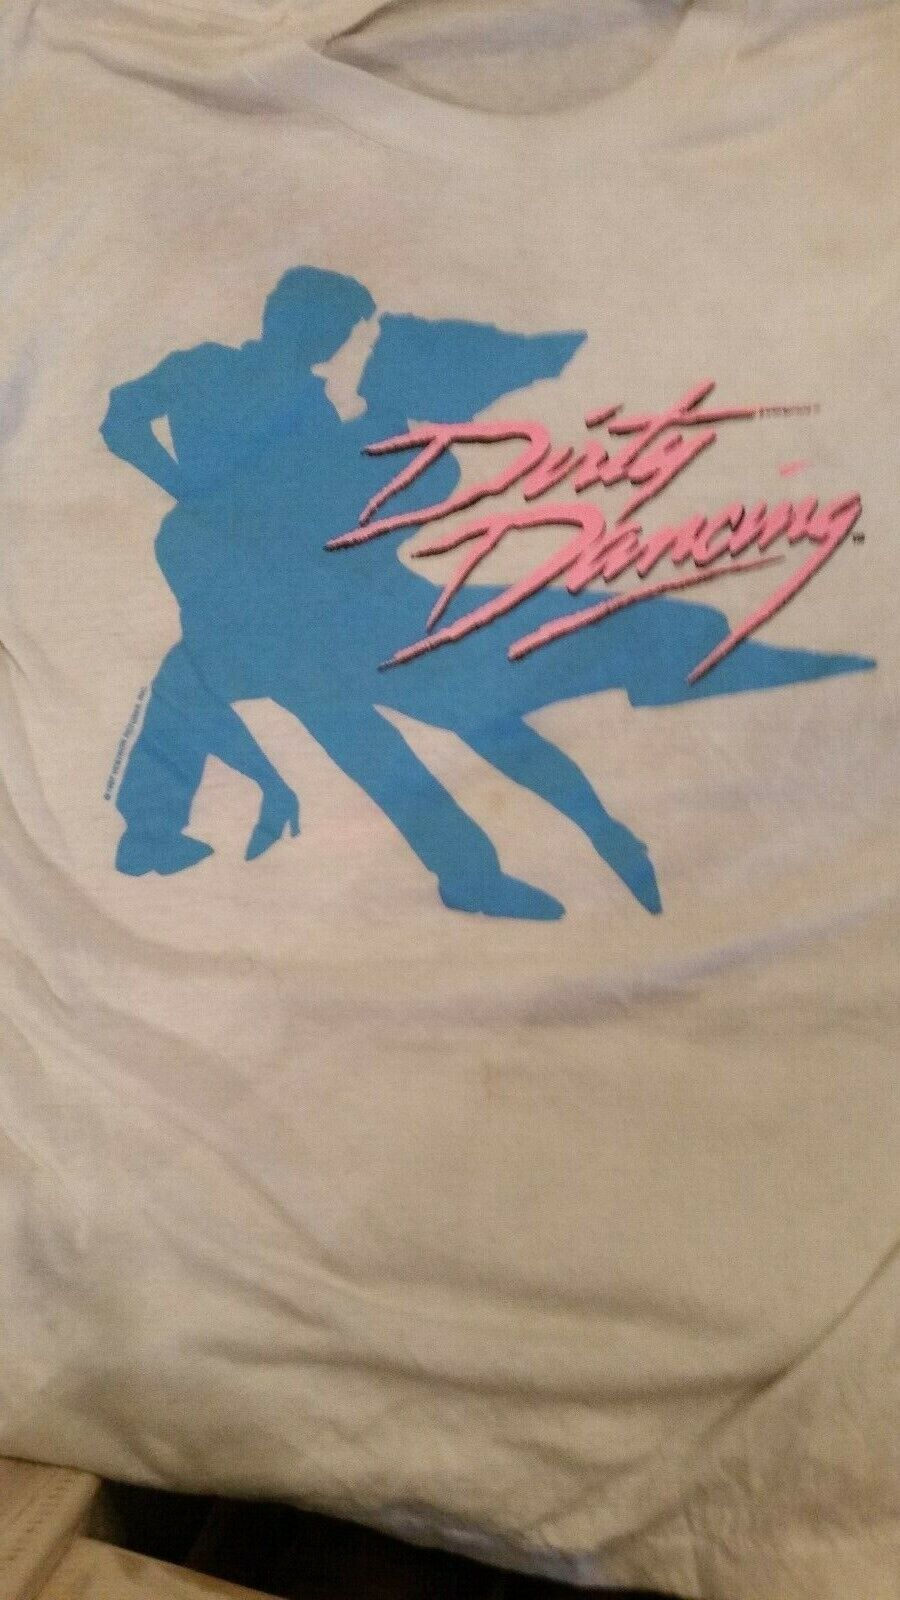 DIRTY DANCING 1987 Vestron Pictures Promotional vintage licensed shirt LG